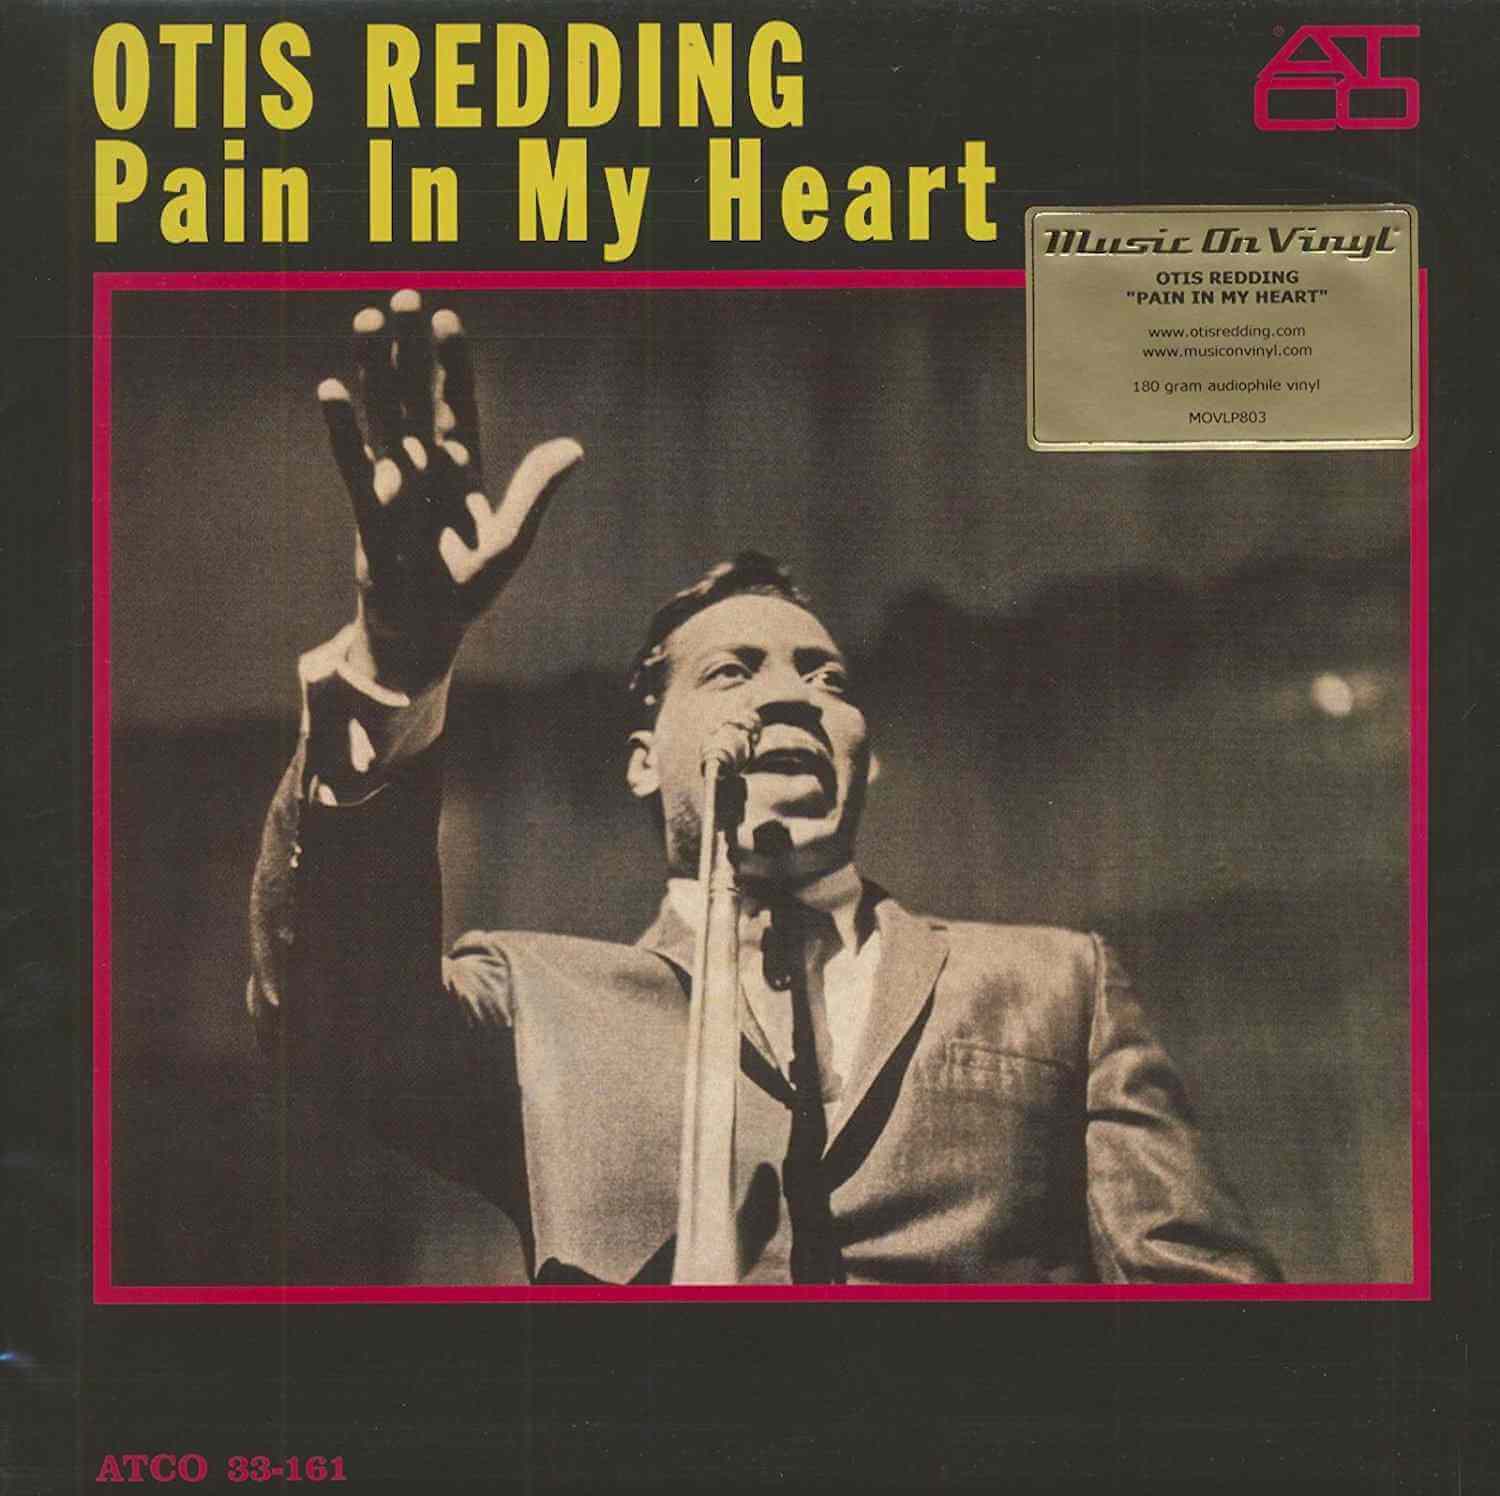 køber Nyttig Dovenskab Review] Otis Redding's first (solo) album: "Pain in My Heart." 1964.